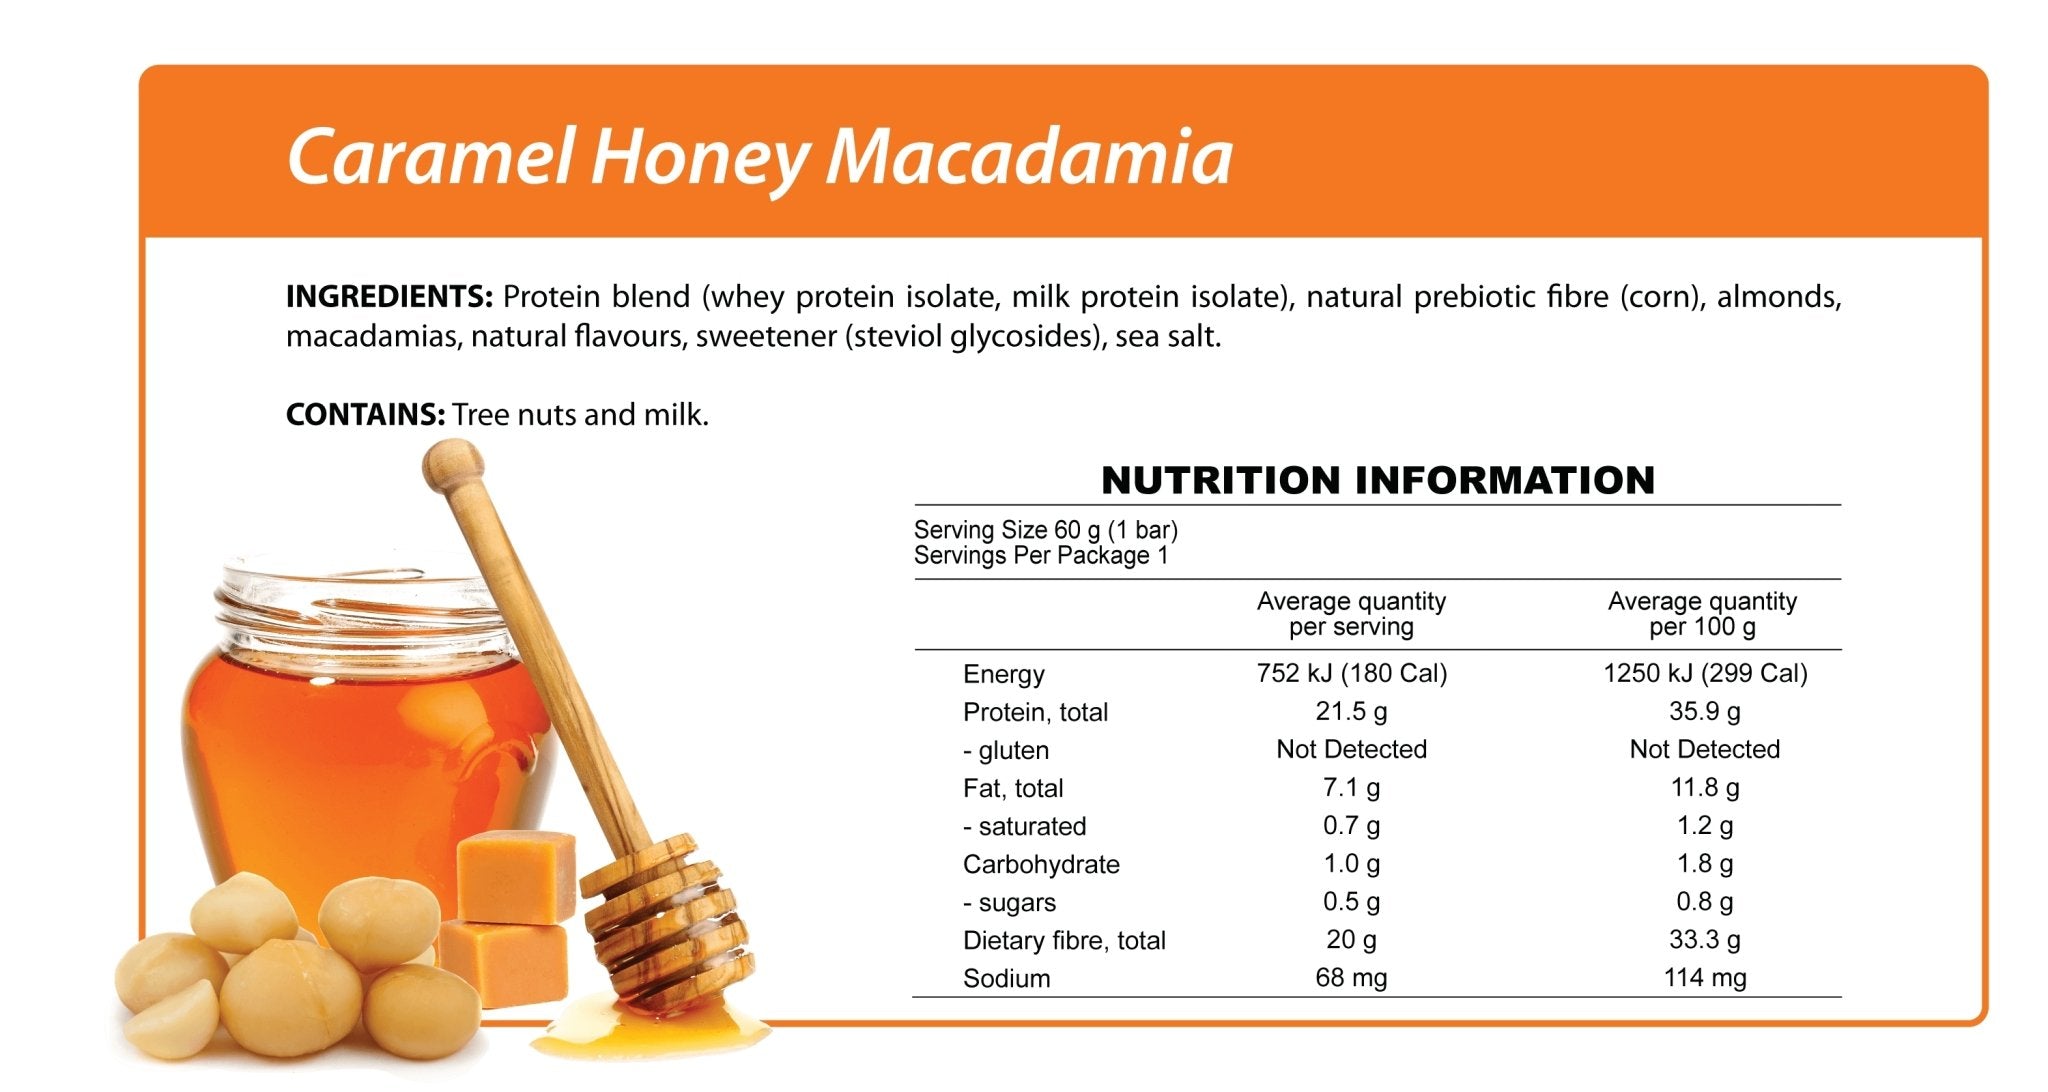 Caramel Honey Macadamia Smart Protein Bar-Bar-Yo Keto